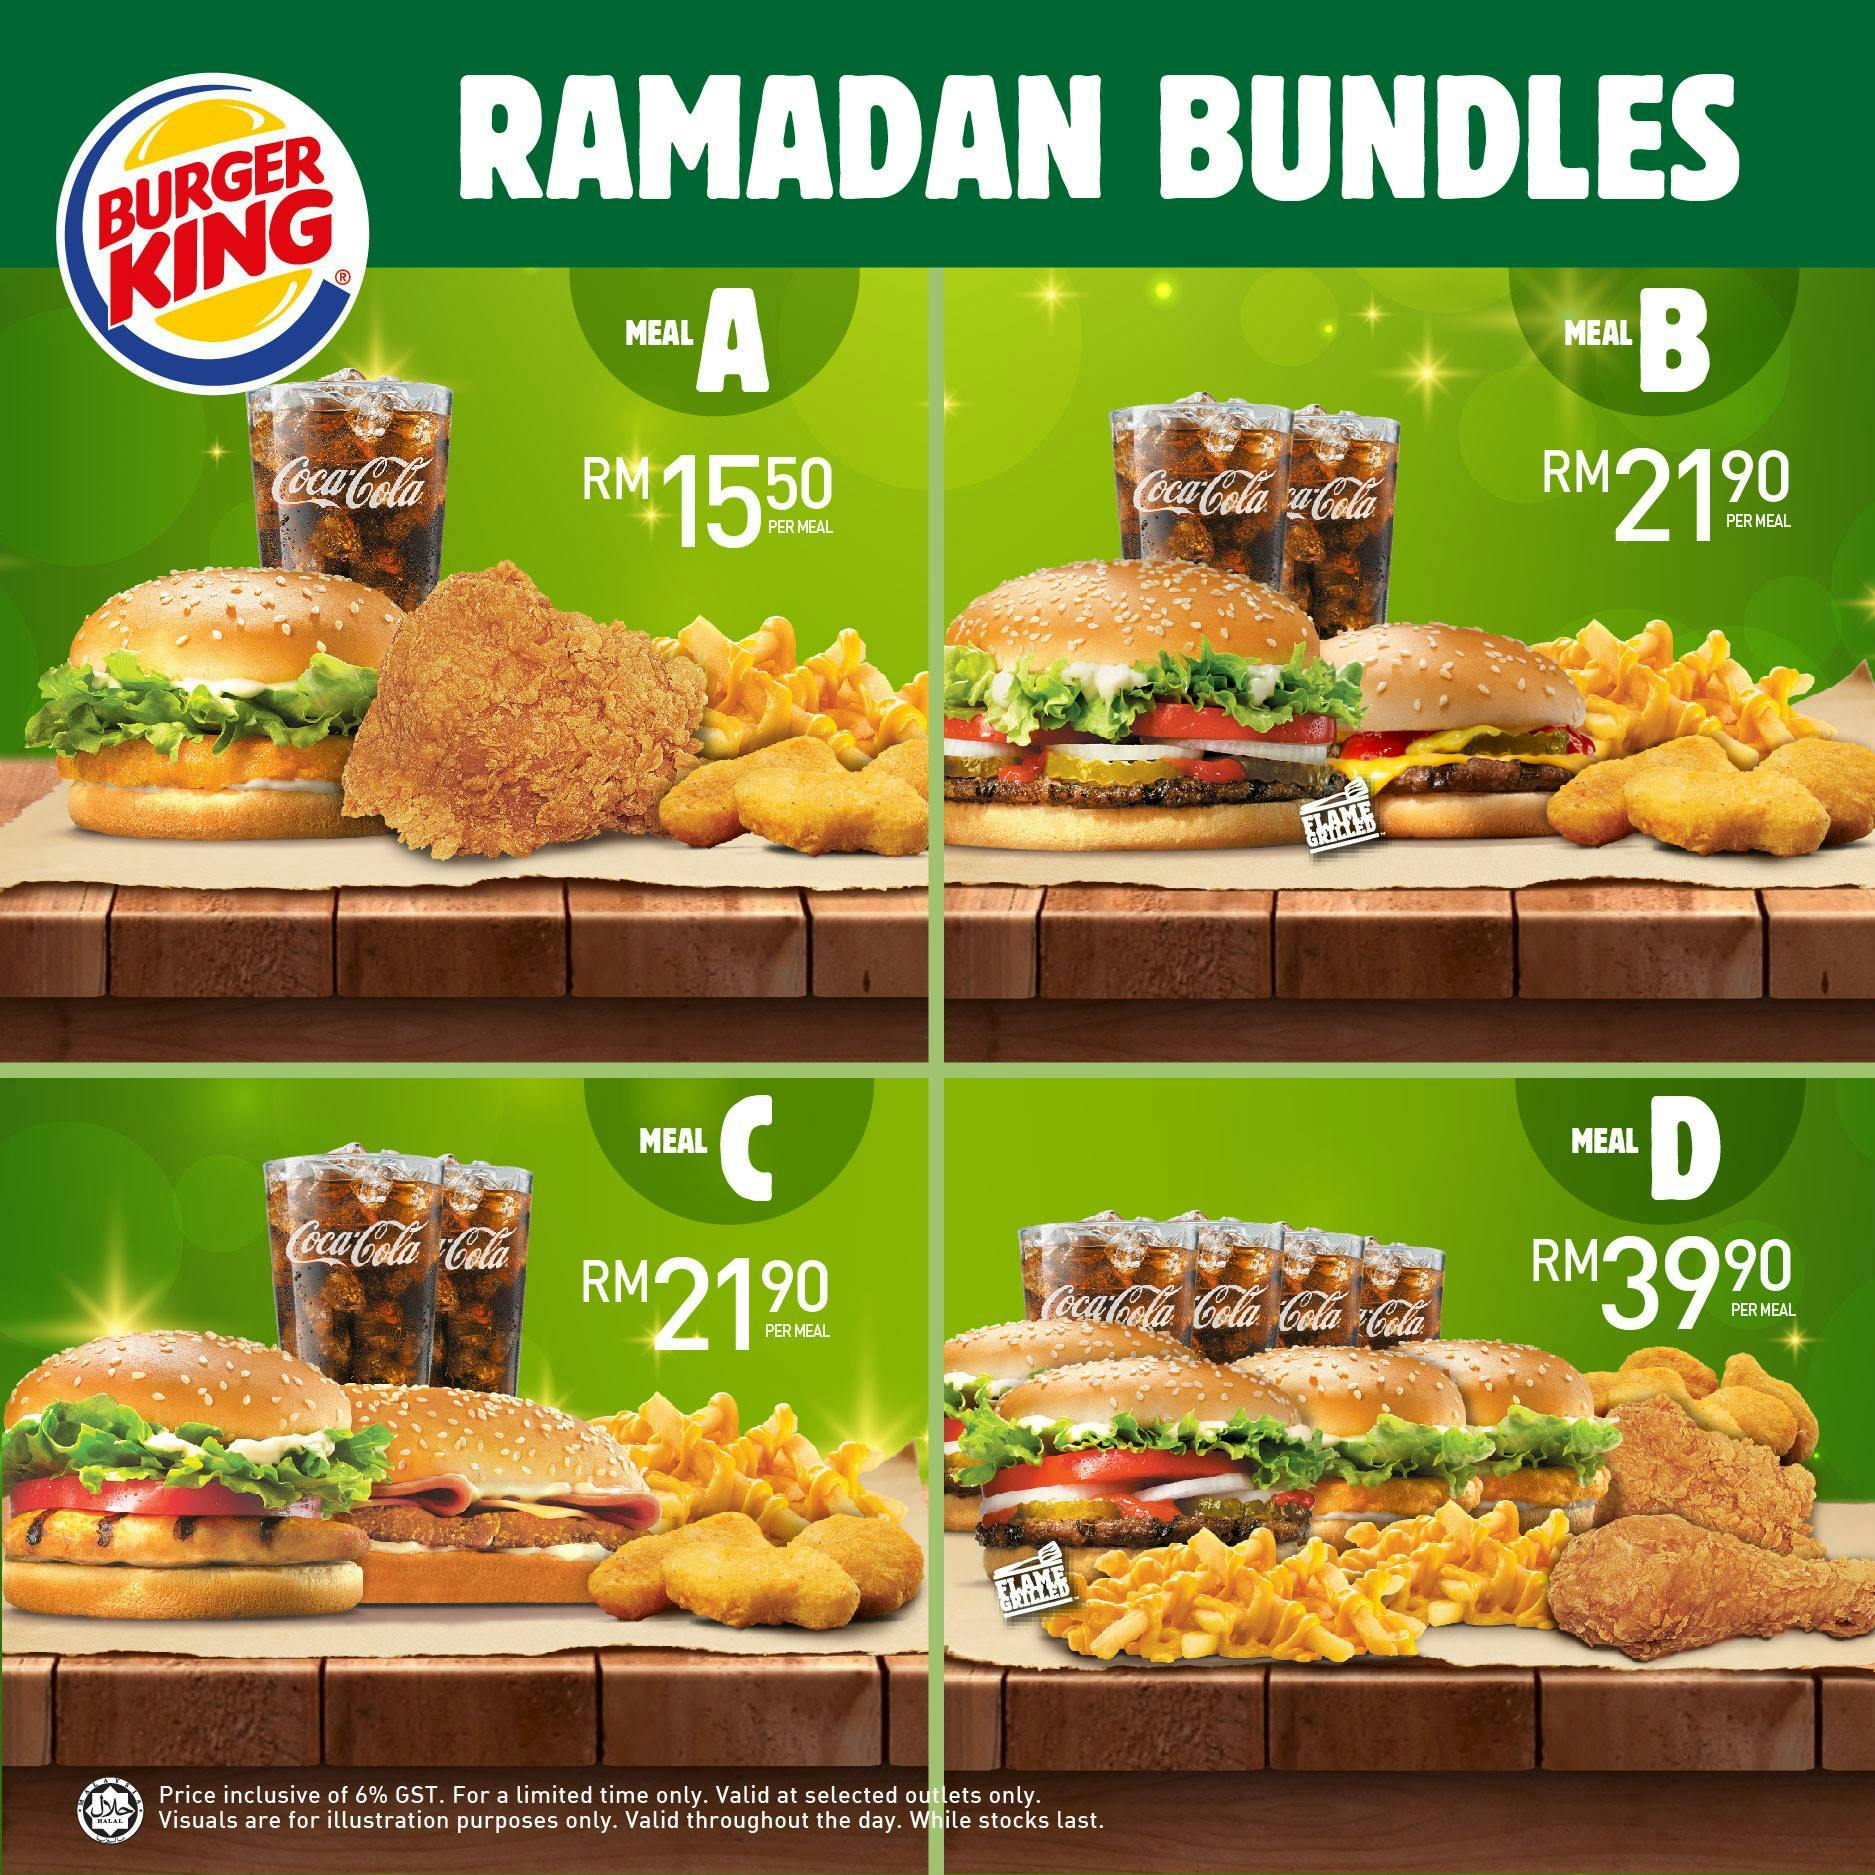 Ramadan promotion at Burger King